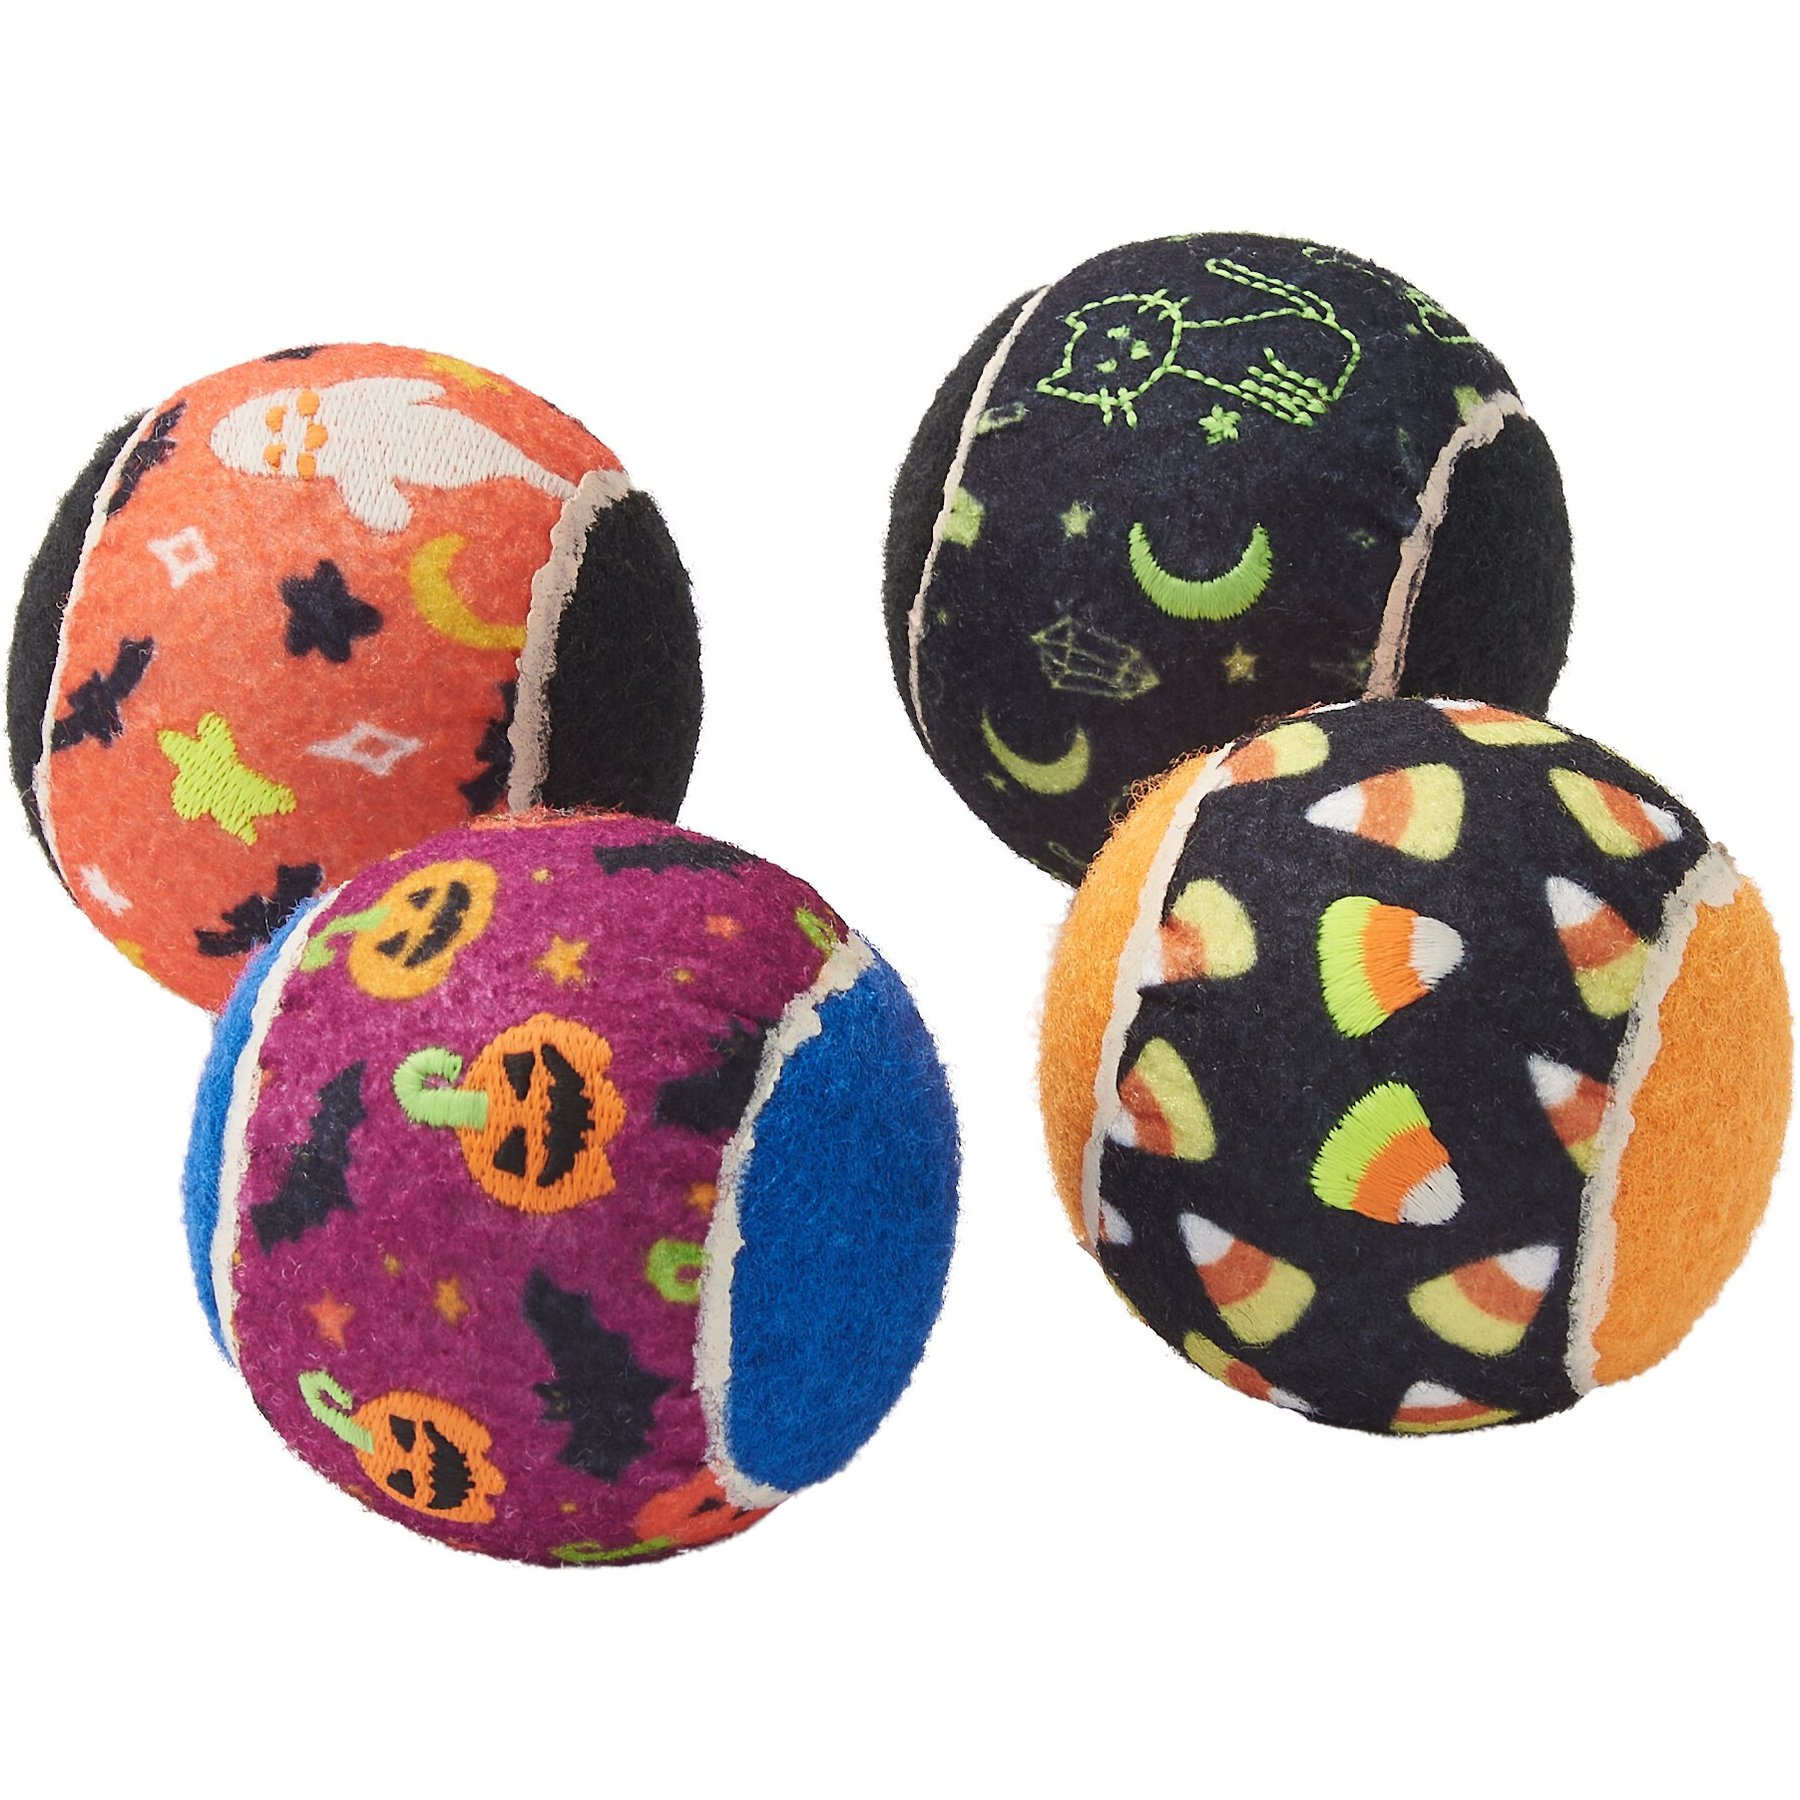 4pk Rubber Dog Balls, Bouncy Puppy Pet Solid Hard Play Ball Fun Fetch Chew  Toys